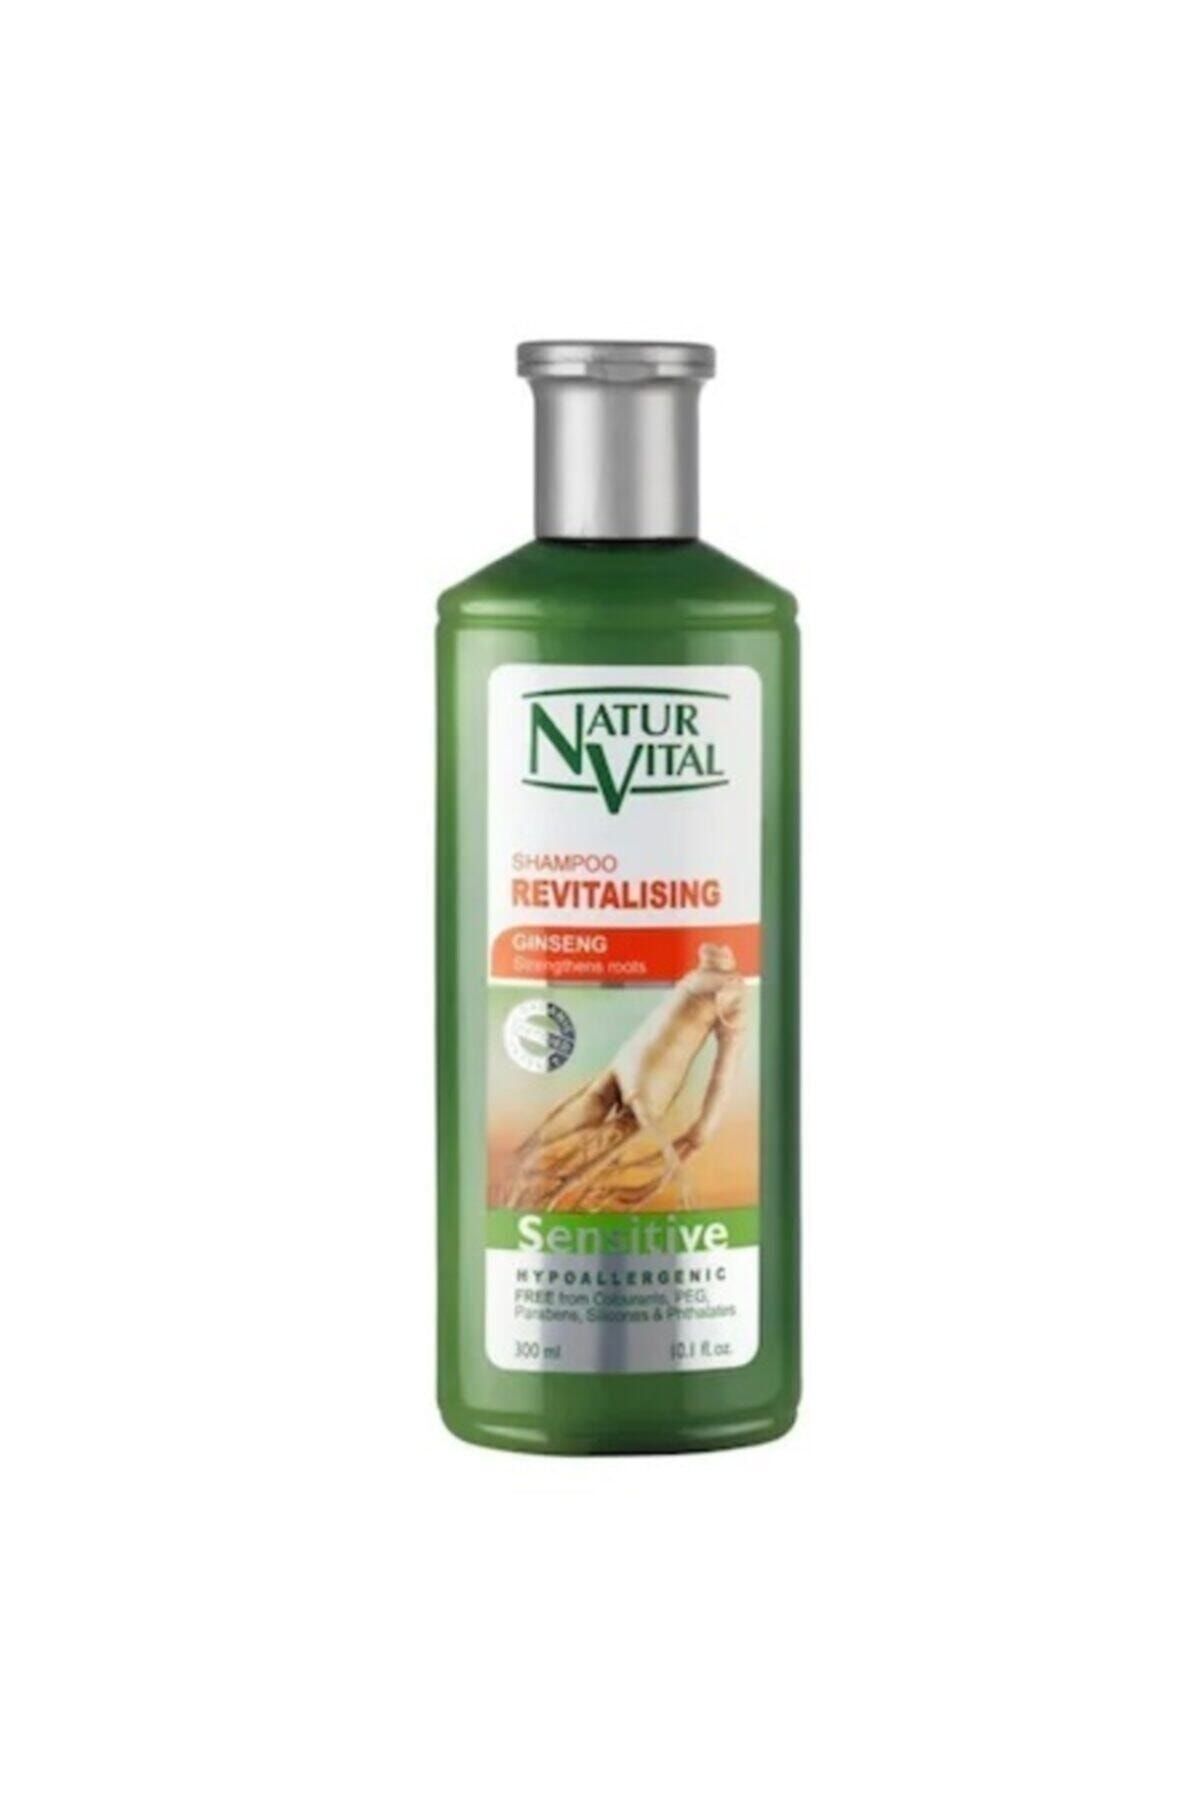 Natur Vital Sensitive Ginseng Shampoo 300 ml